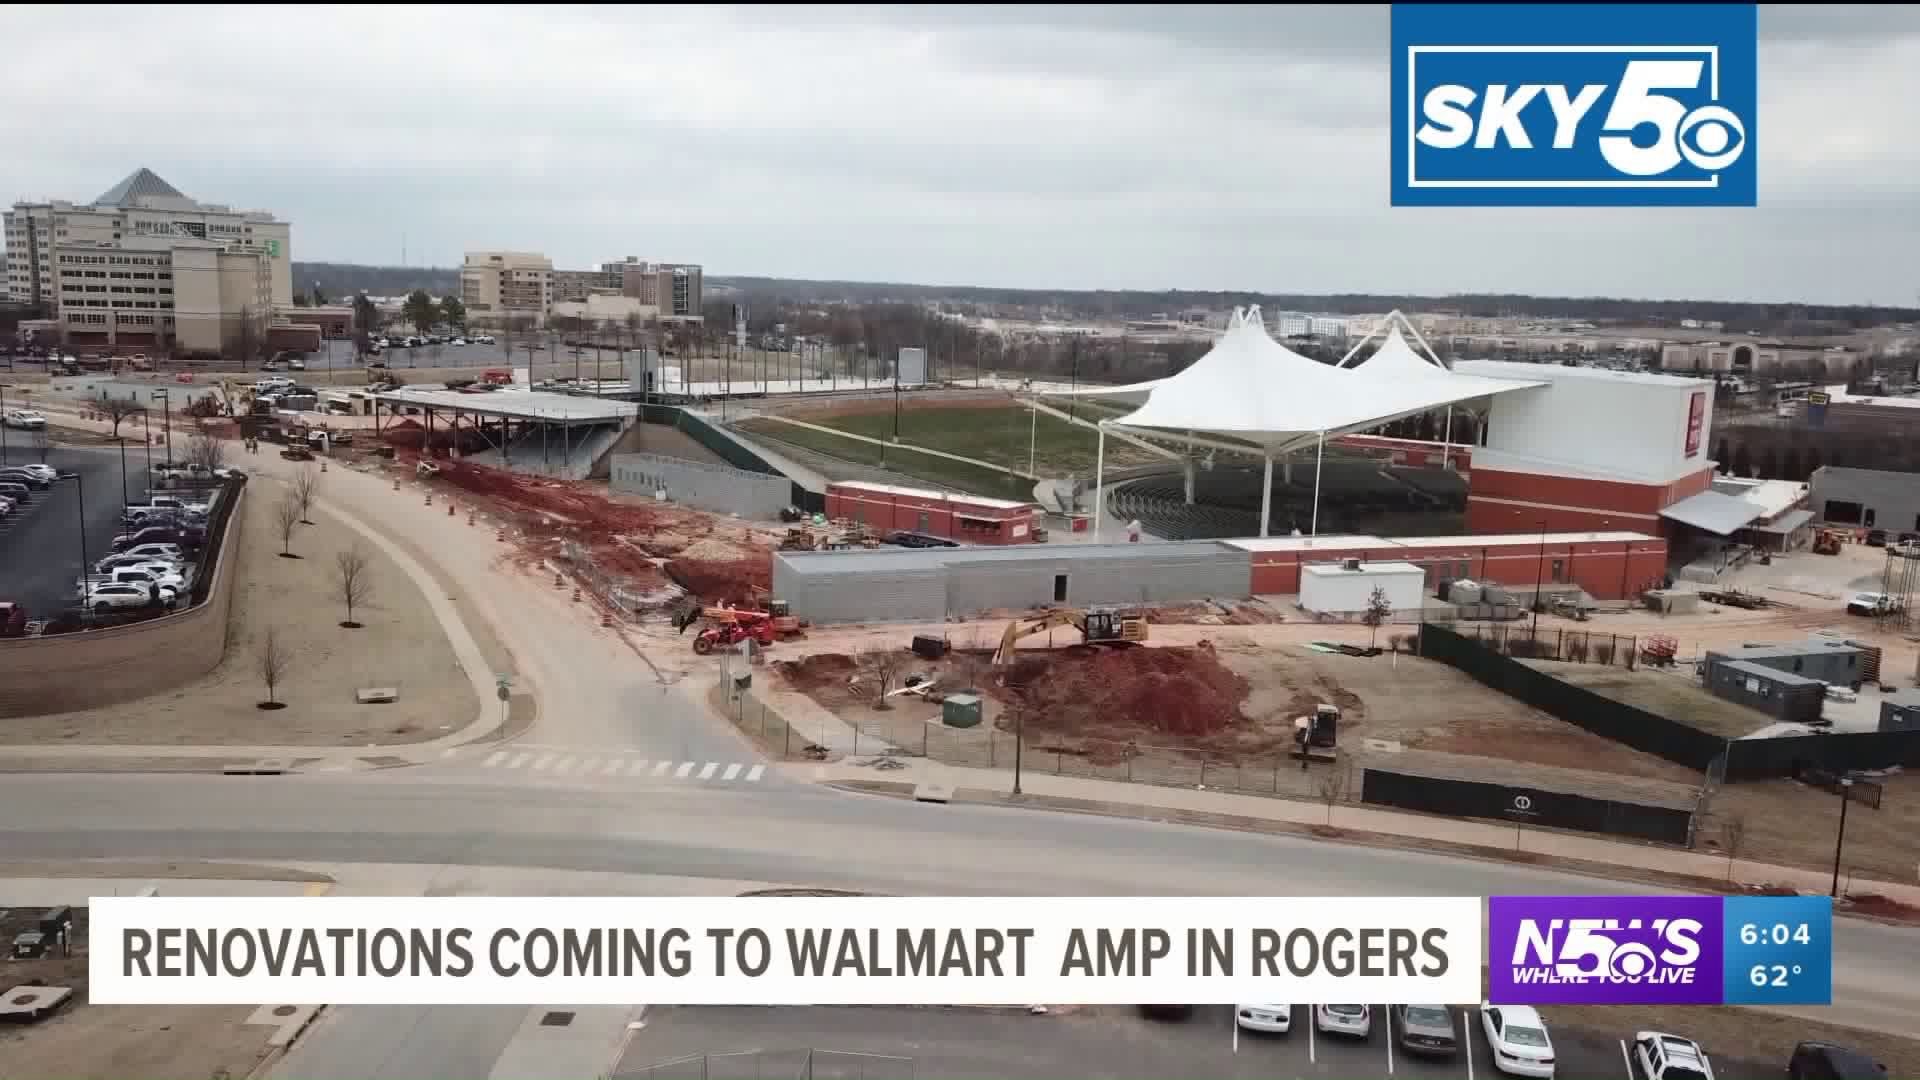 Renovations to Walmart AMP